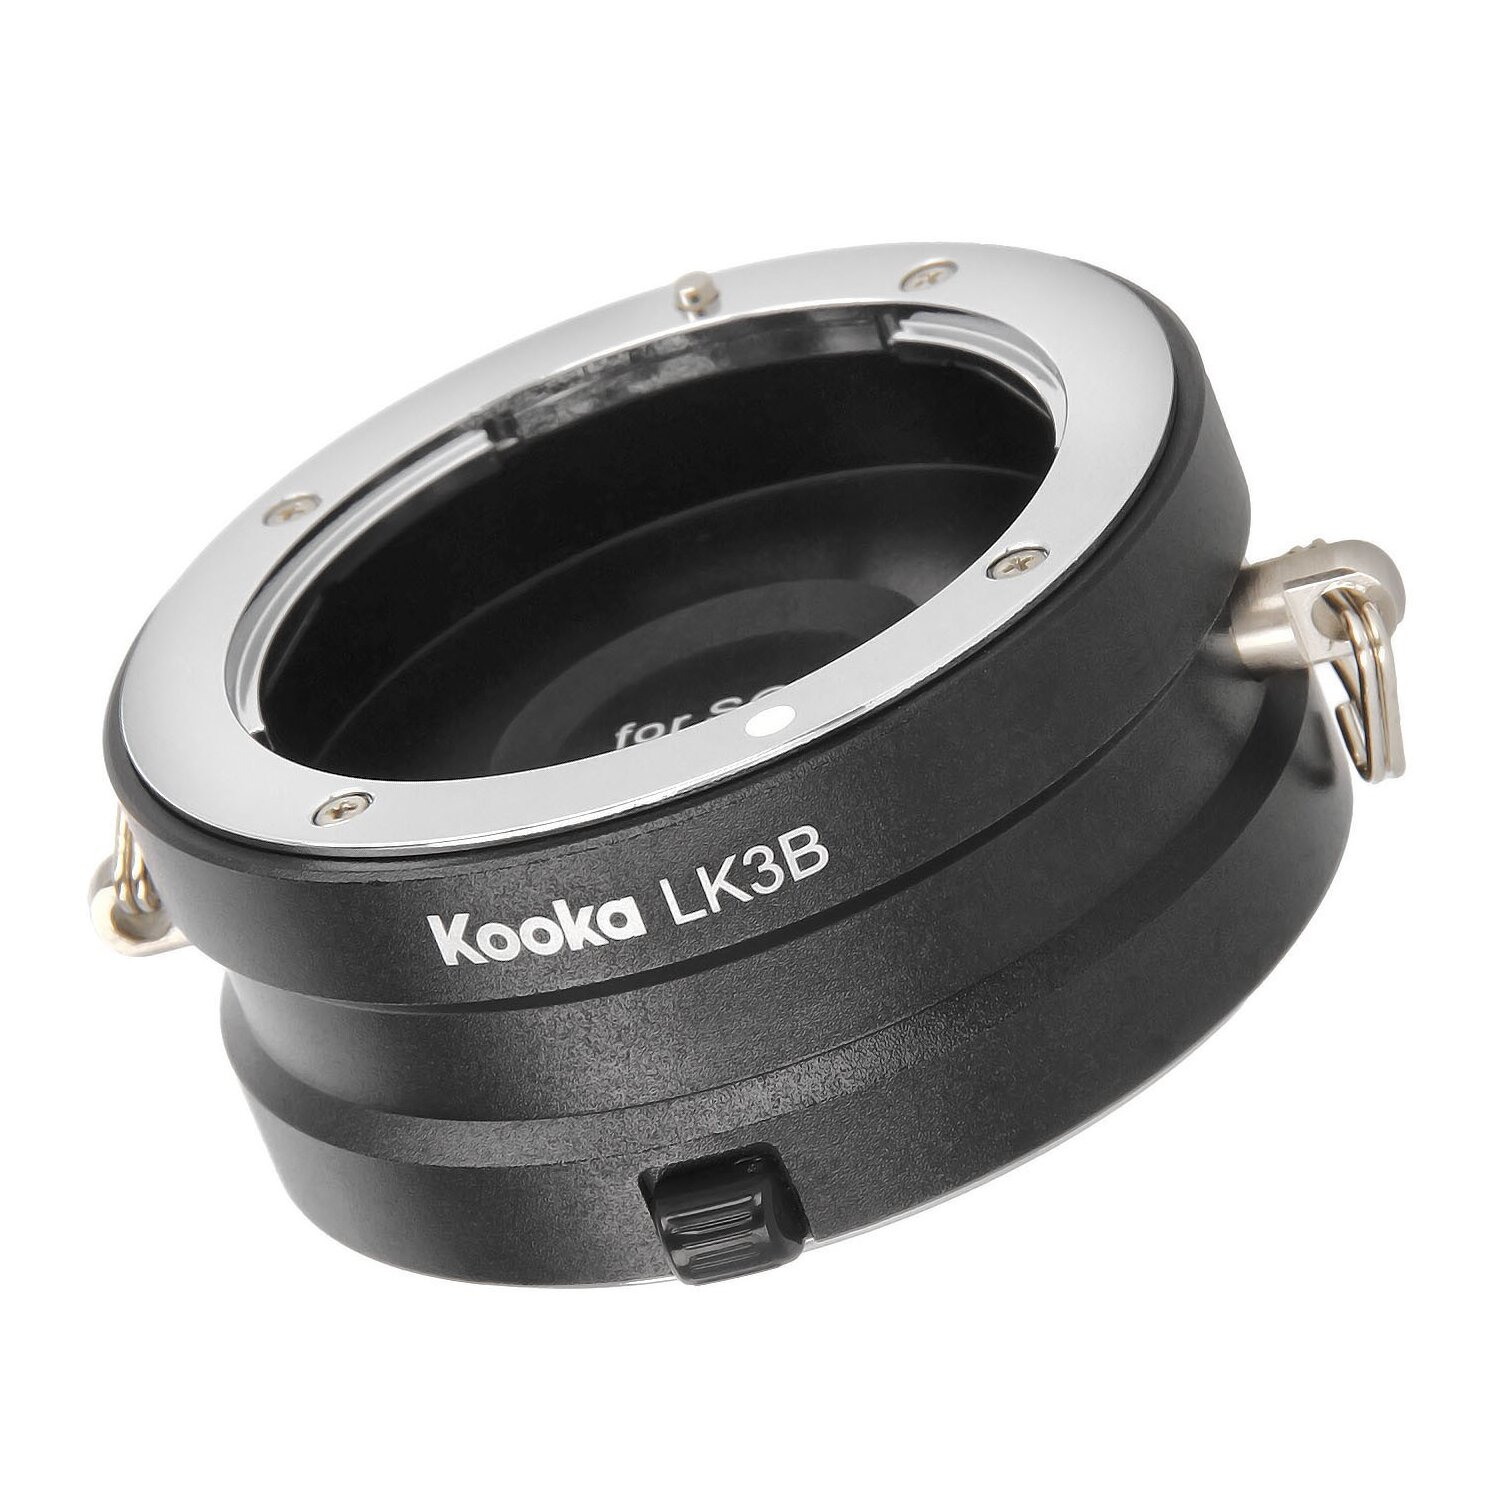 Micnova KK-LK3B Innovative 2-Fach Objektivhalterung Objektivgurt aus Metall fuer Objektive mit Sony E-Bajonett